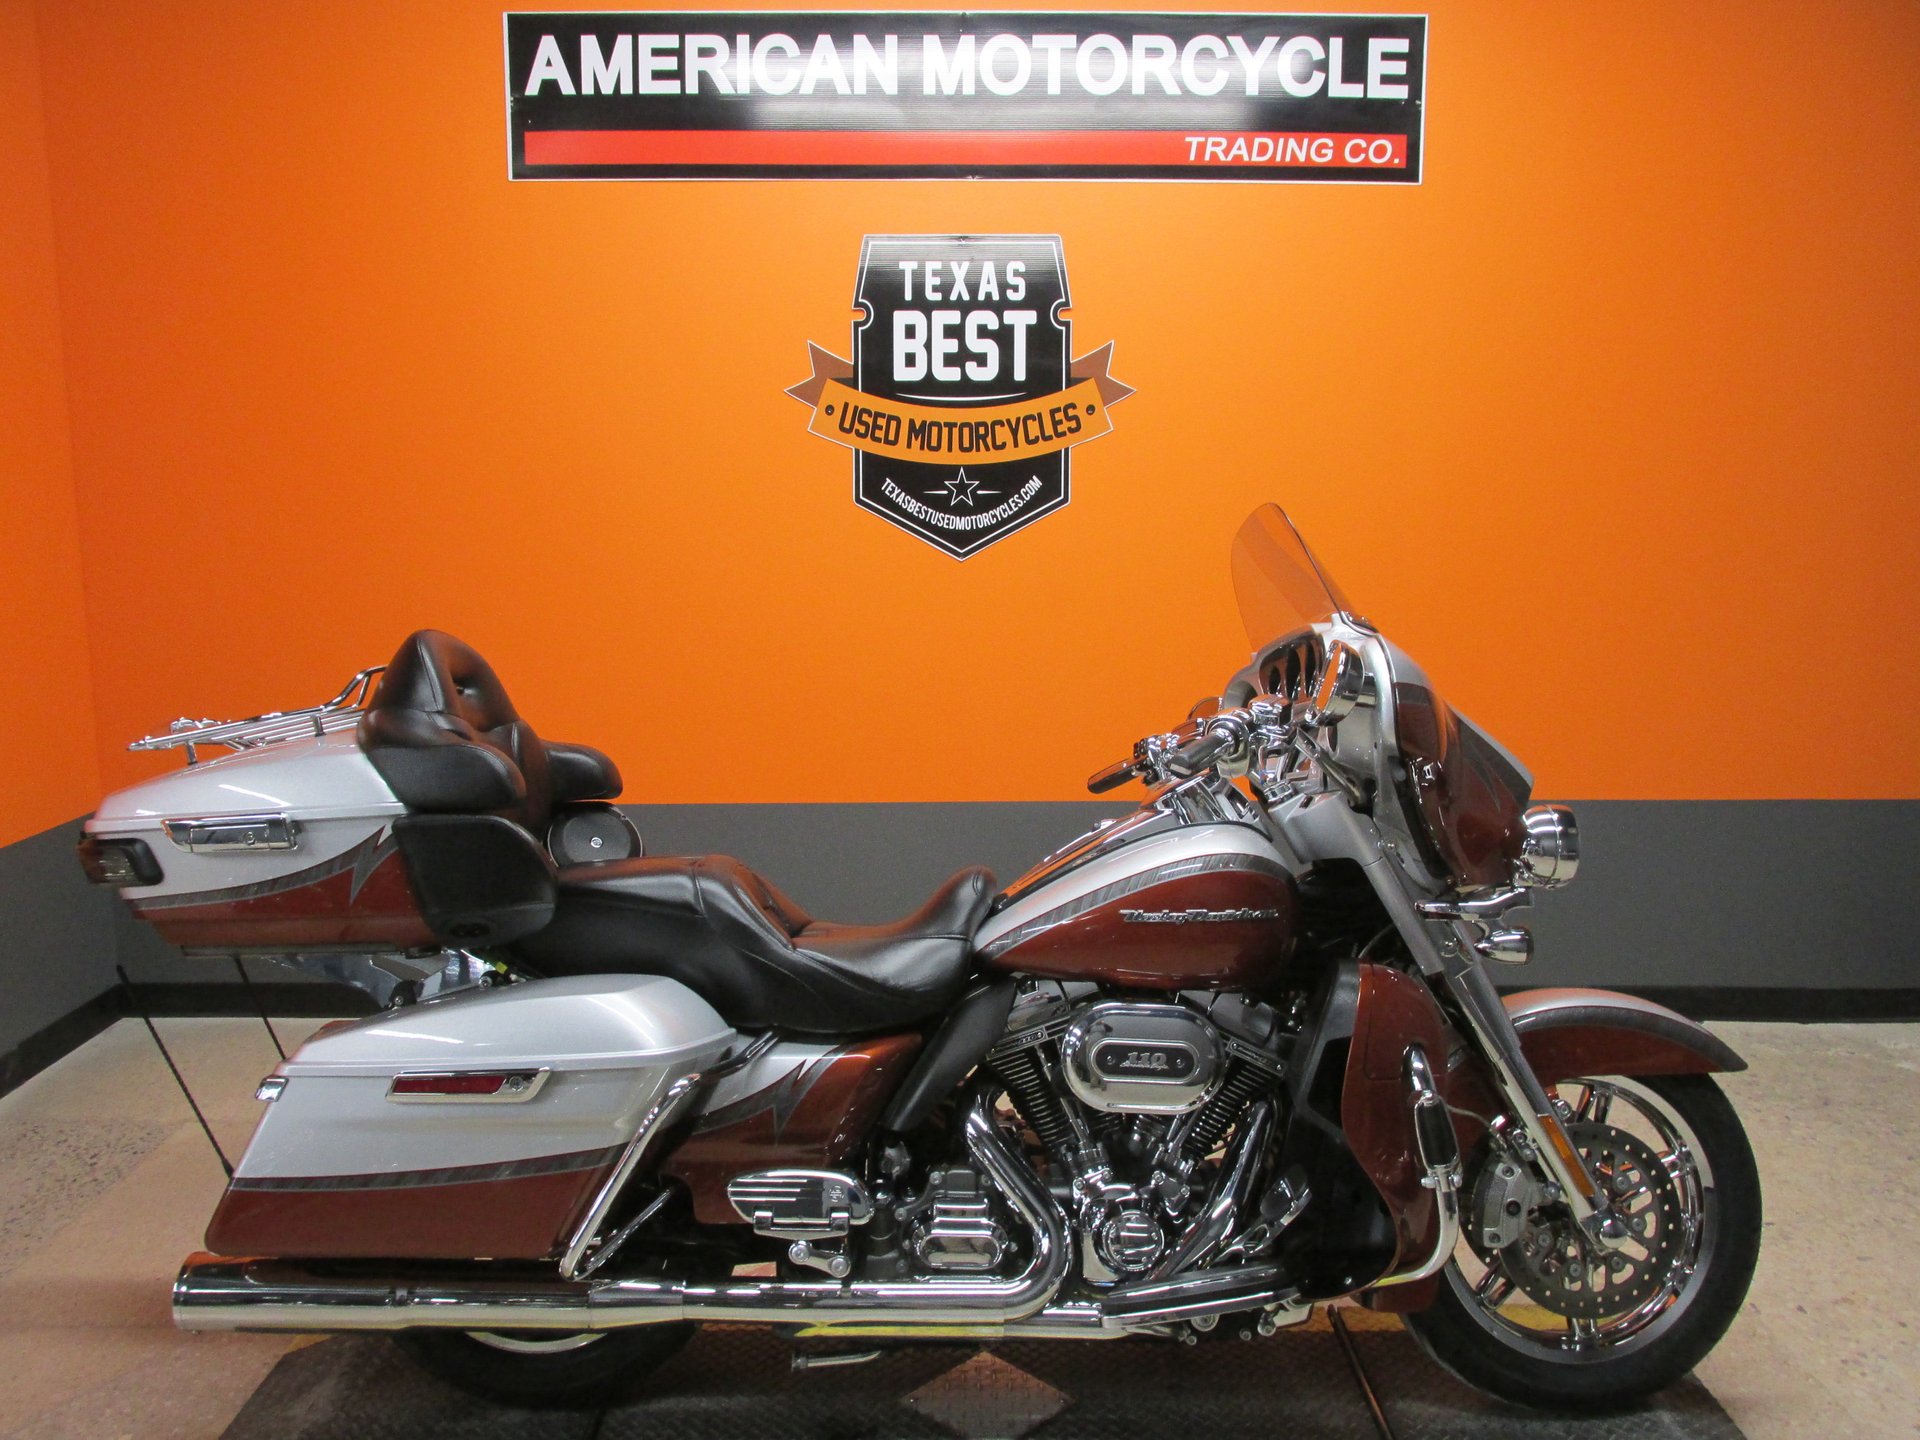 2014 Harley-Davidson CVO Ultra Limited | American Motorcycle Trading  Company - Used Harley Davidson Motorcycles